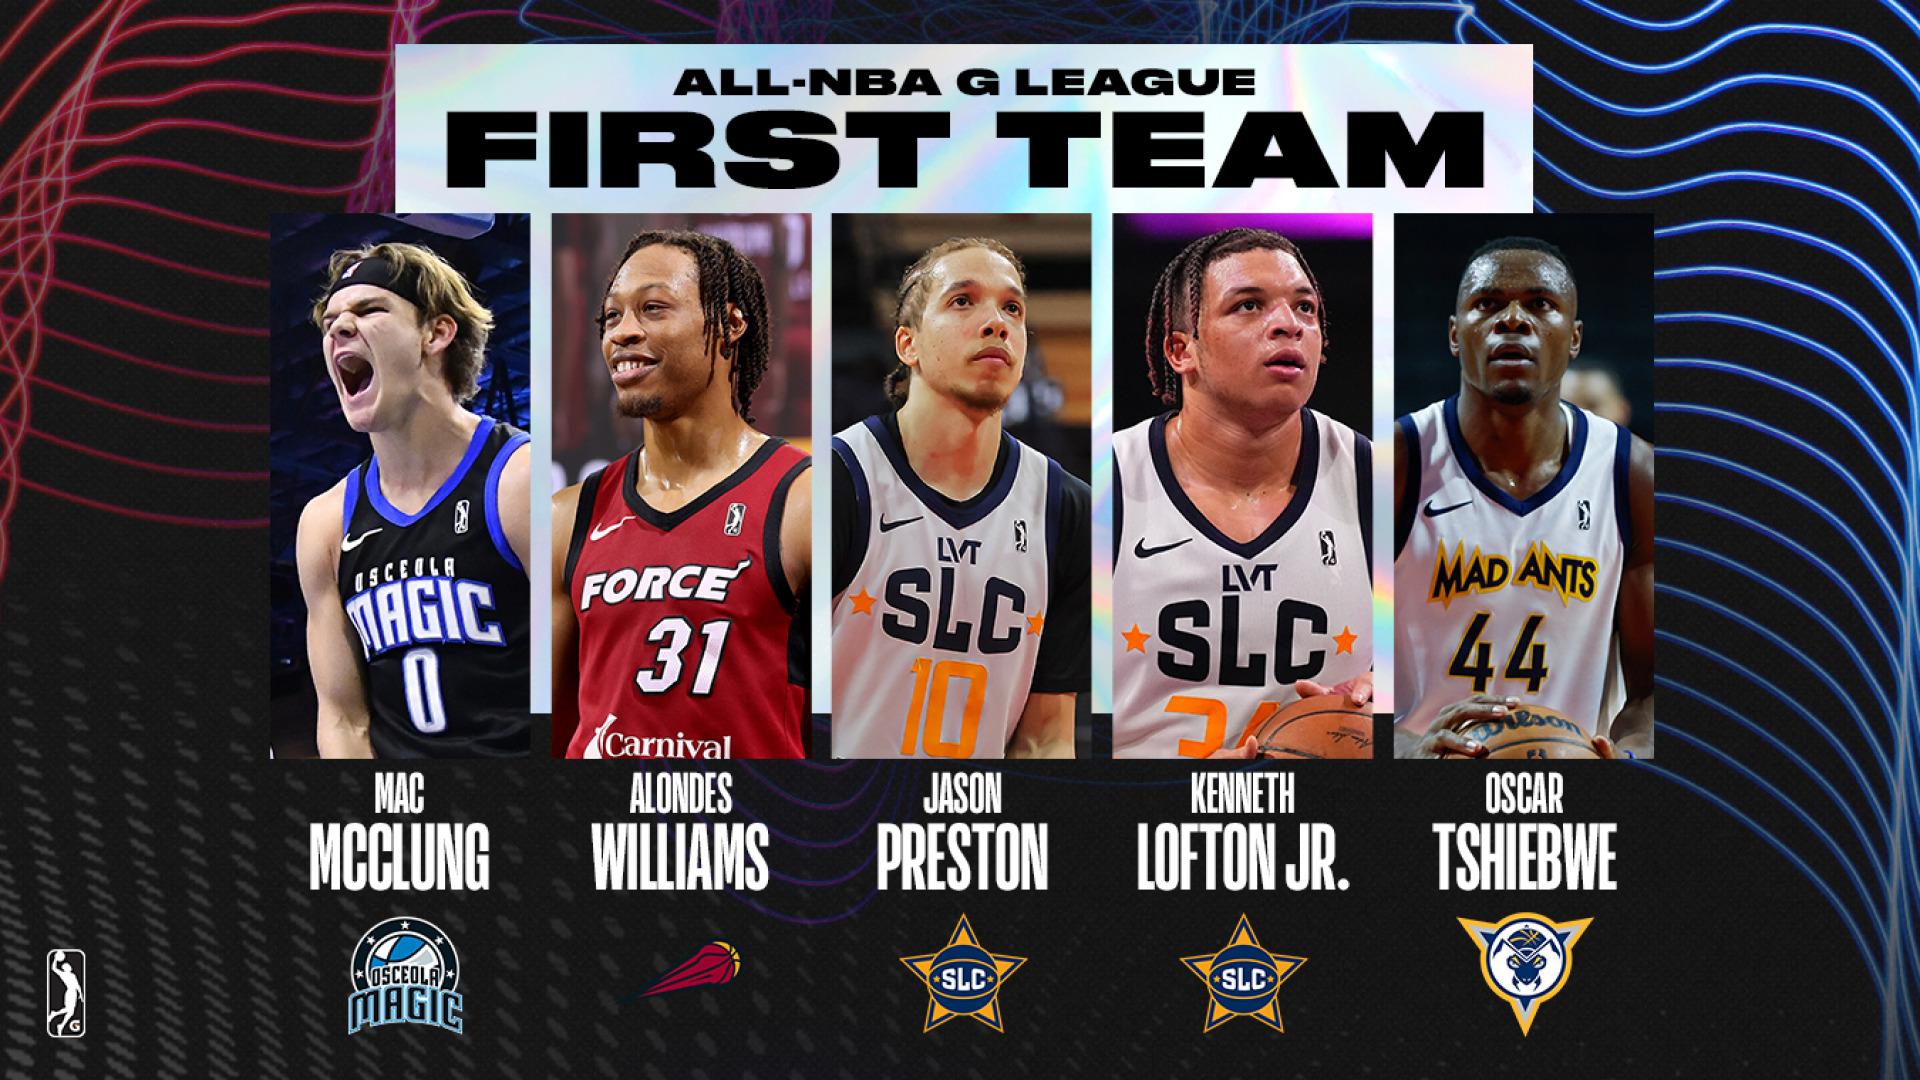 All-NBA G League First Team